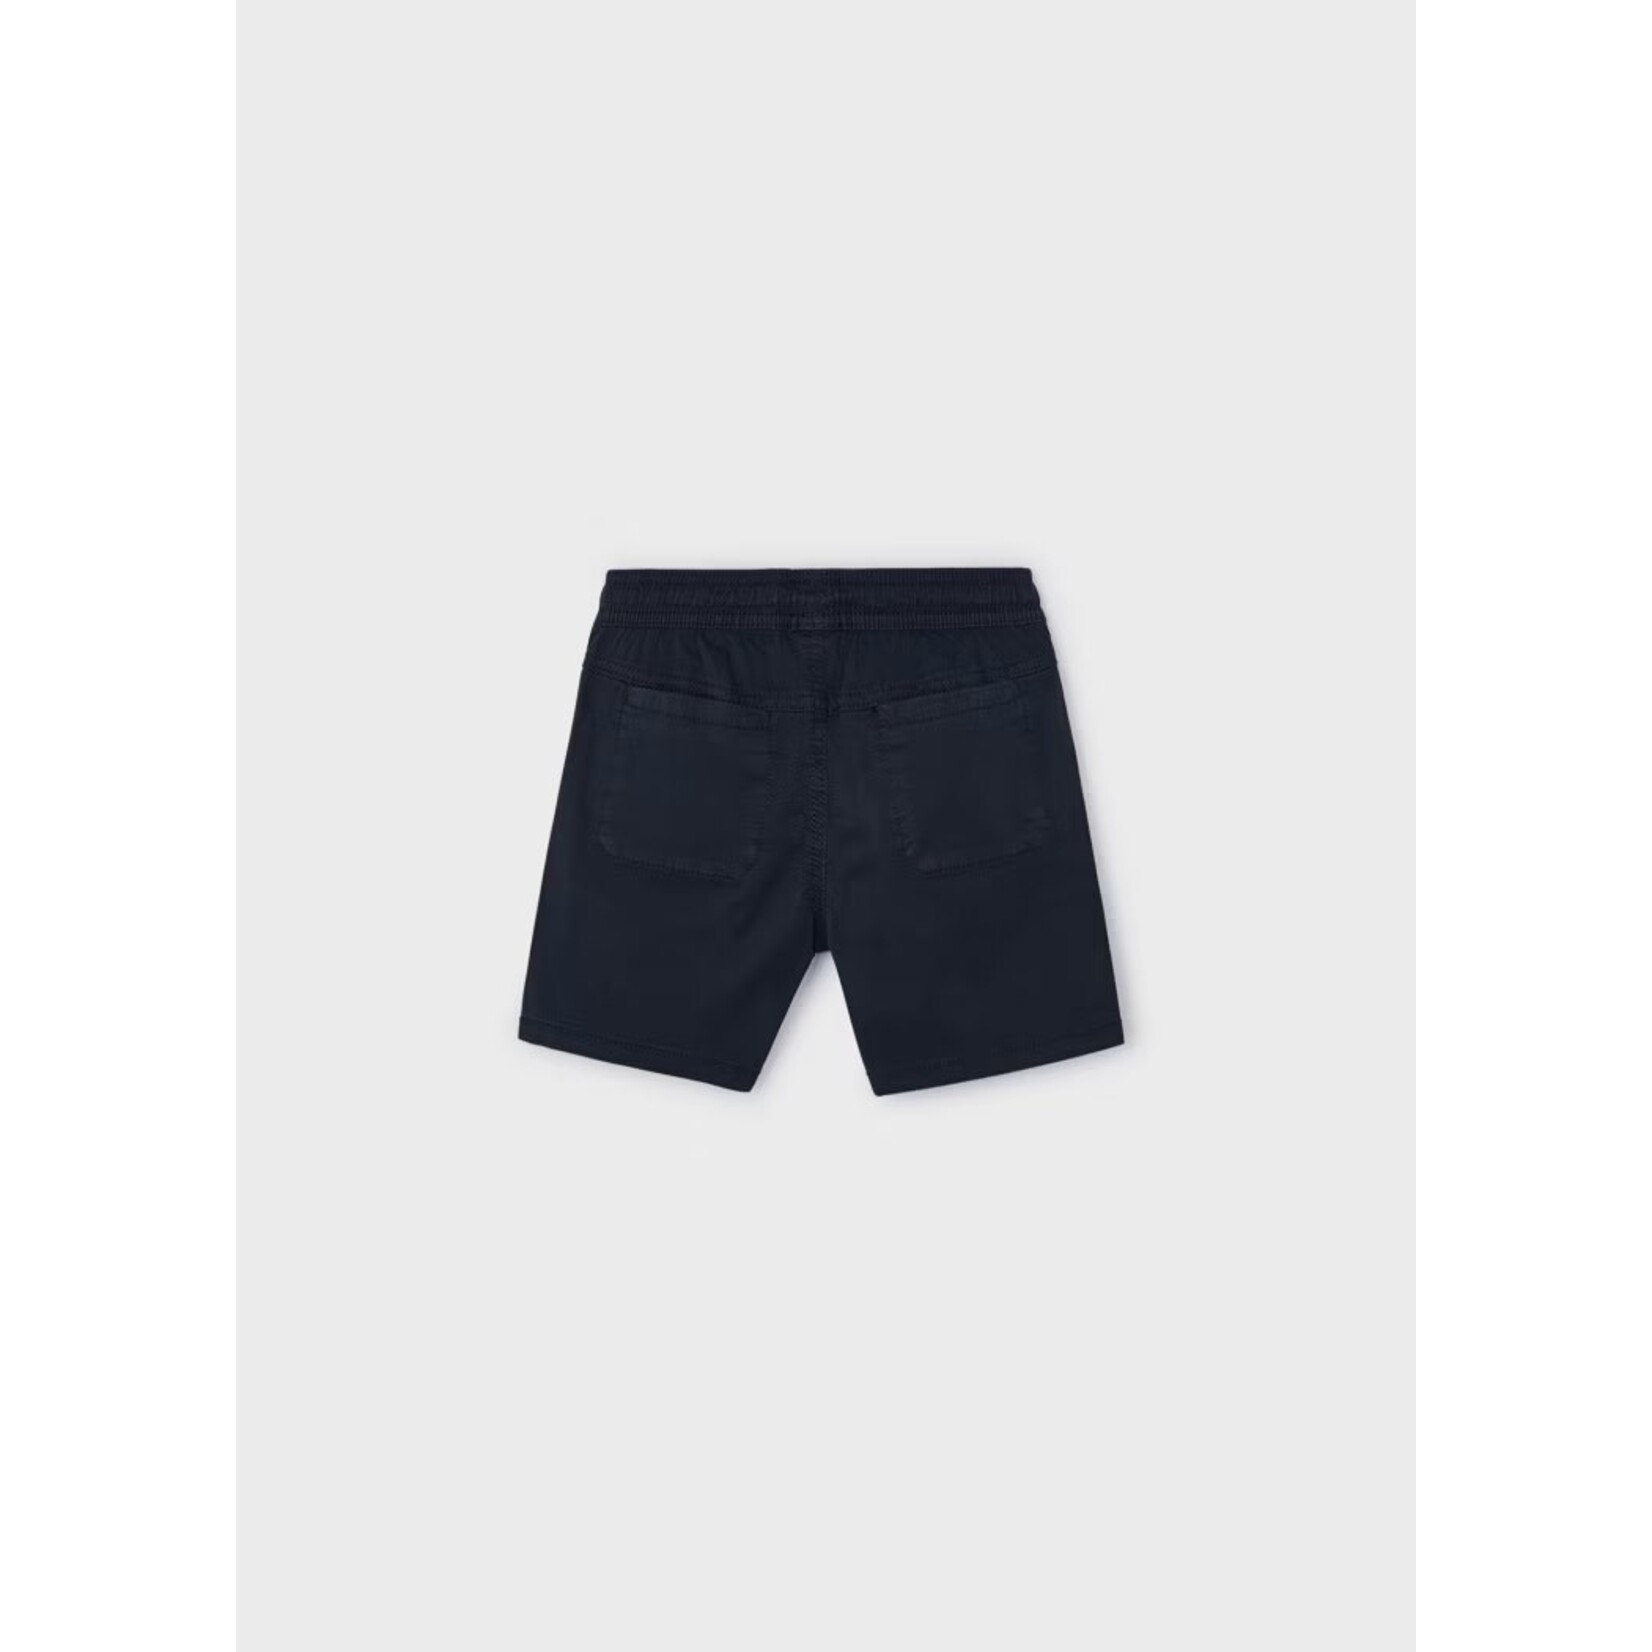 Mayoral MAYORAL - Navy blue cotton shorts